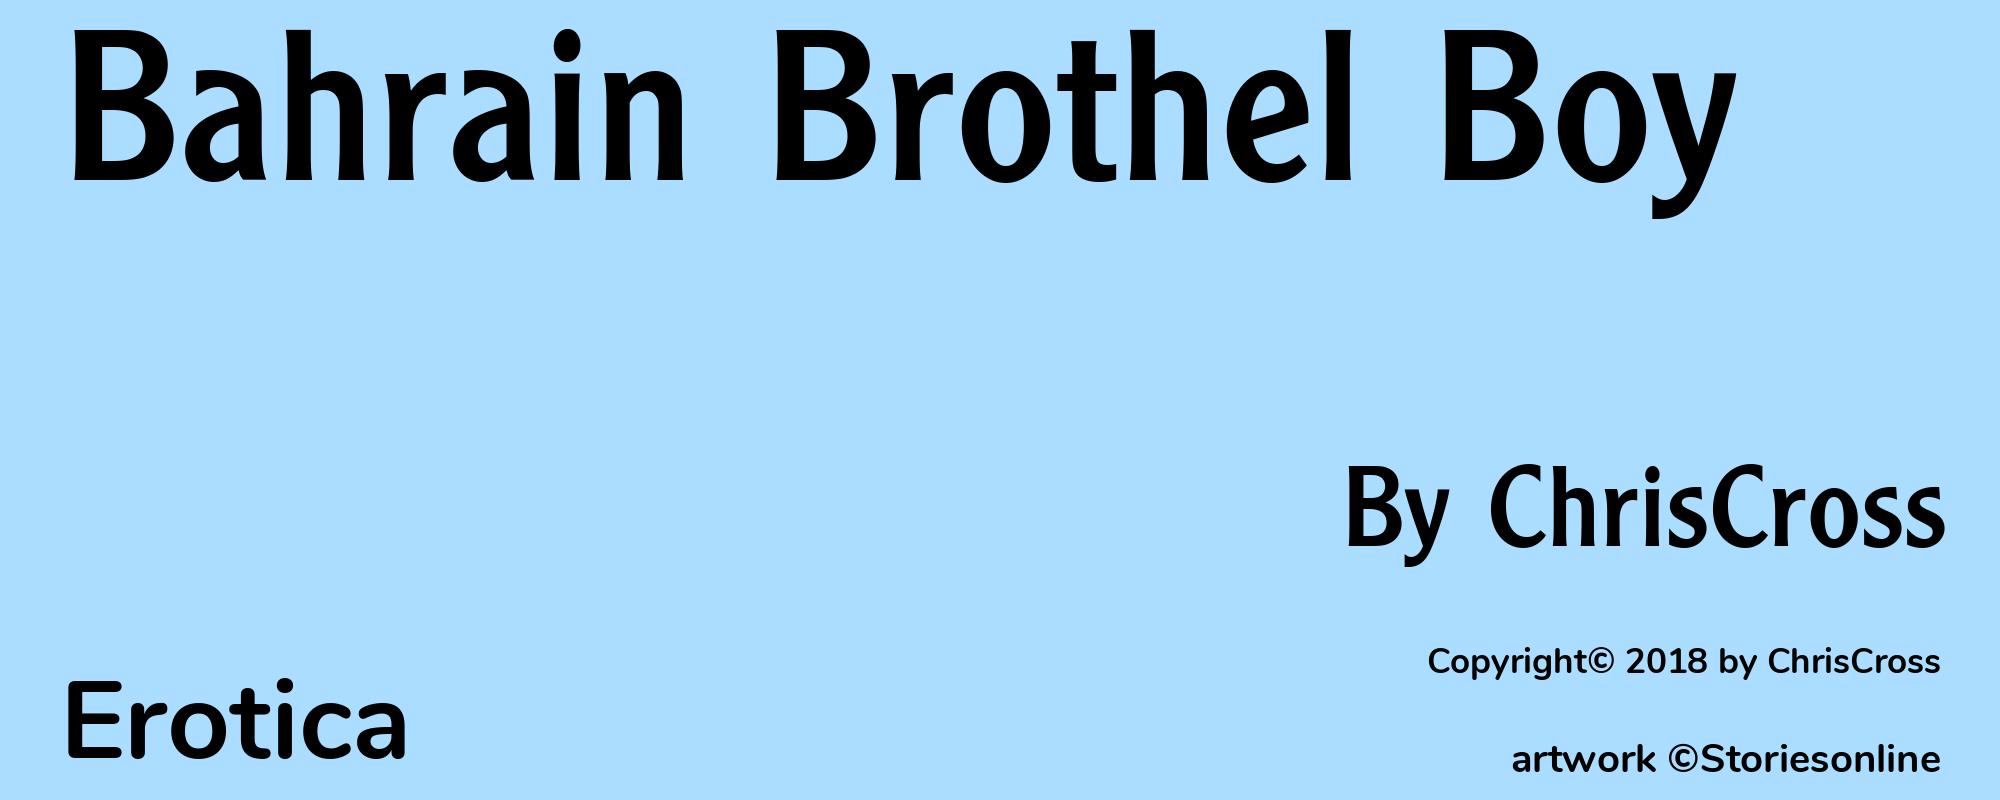 Bahrain Brothel Boy - Cover